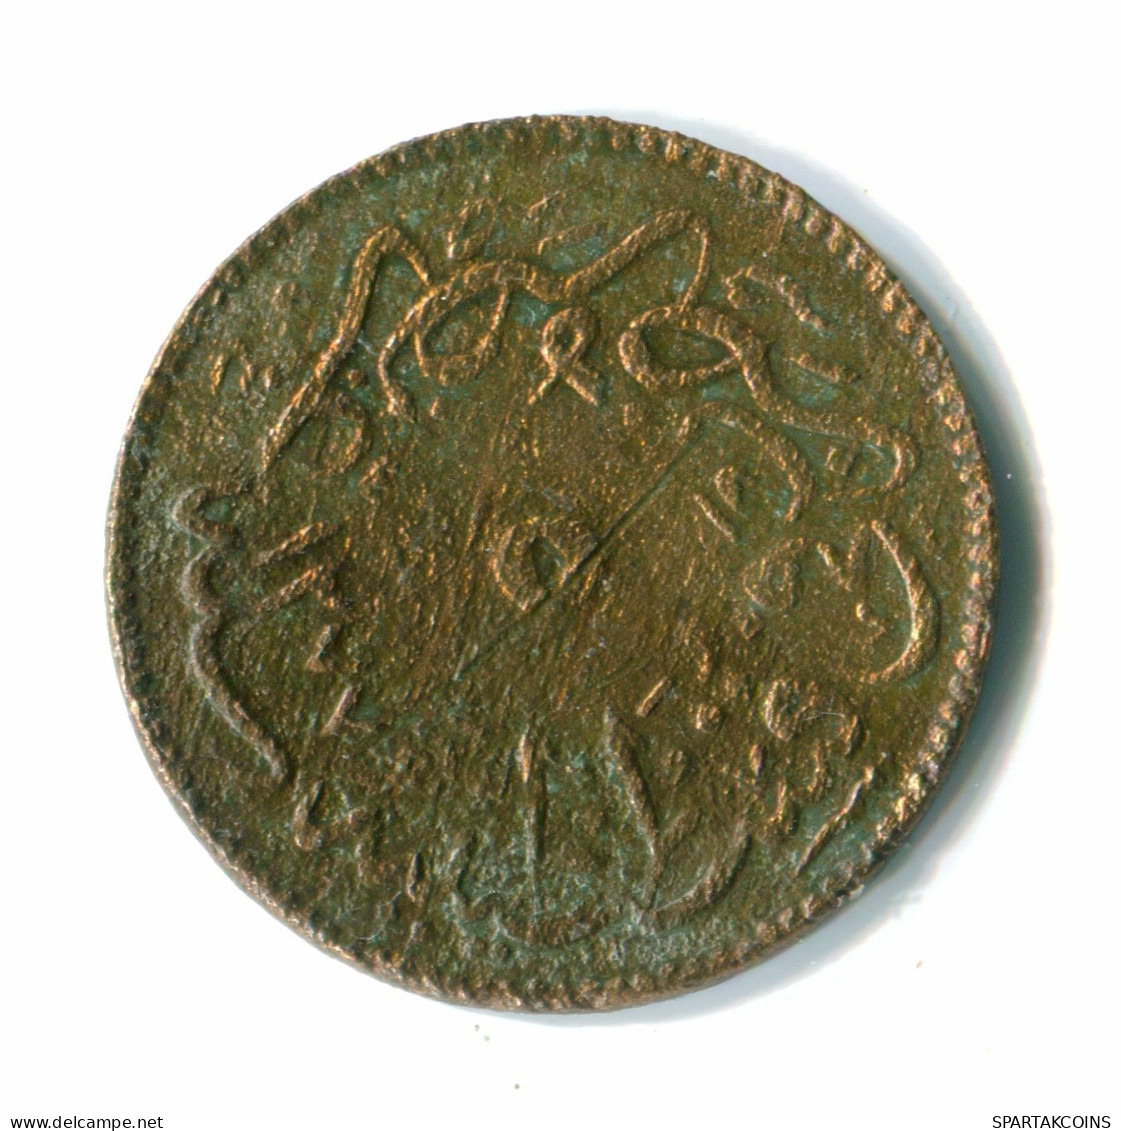 ISLAMIC OTTOMAN EMPIRE Abdulmecid I 5 Para AH1255 Islamic Coin #MED10103.7.E.A - Islamische Münzen